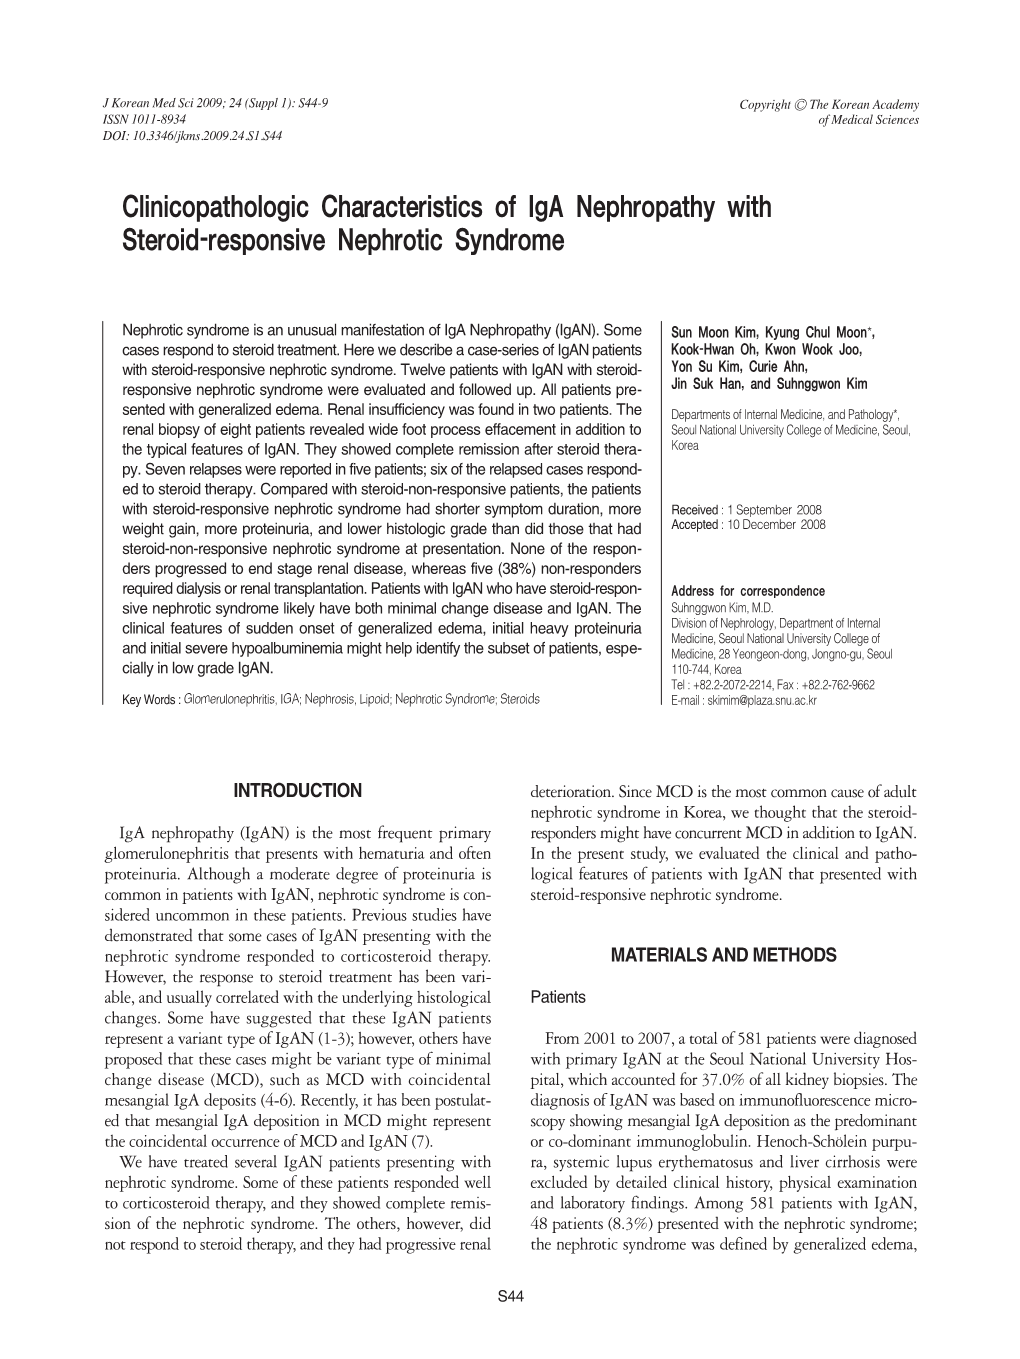 Clinicopathologic Characteristics of Iga Nephropathy with Steroid-Responsive Nephrotic Syndrome